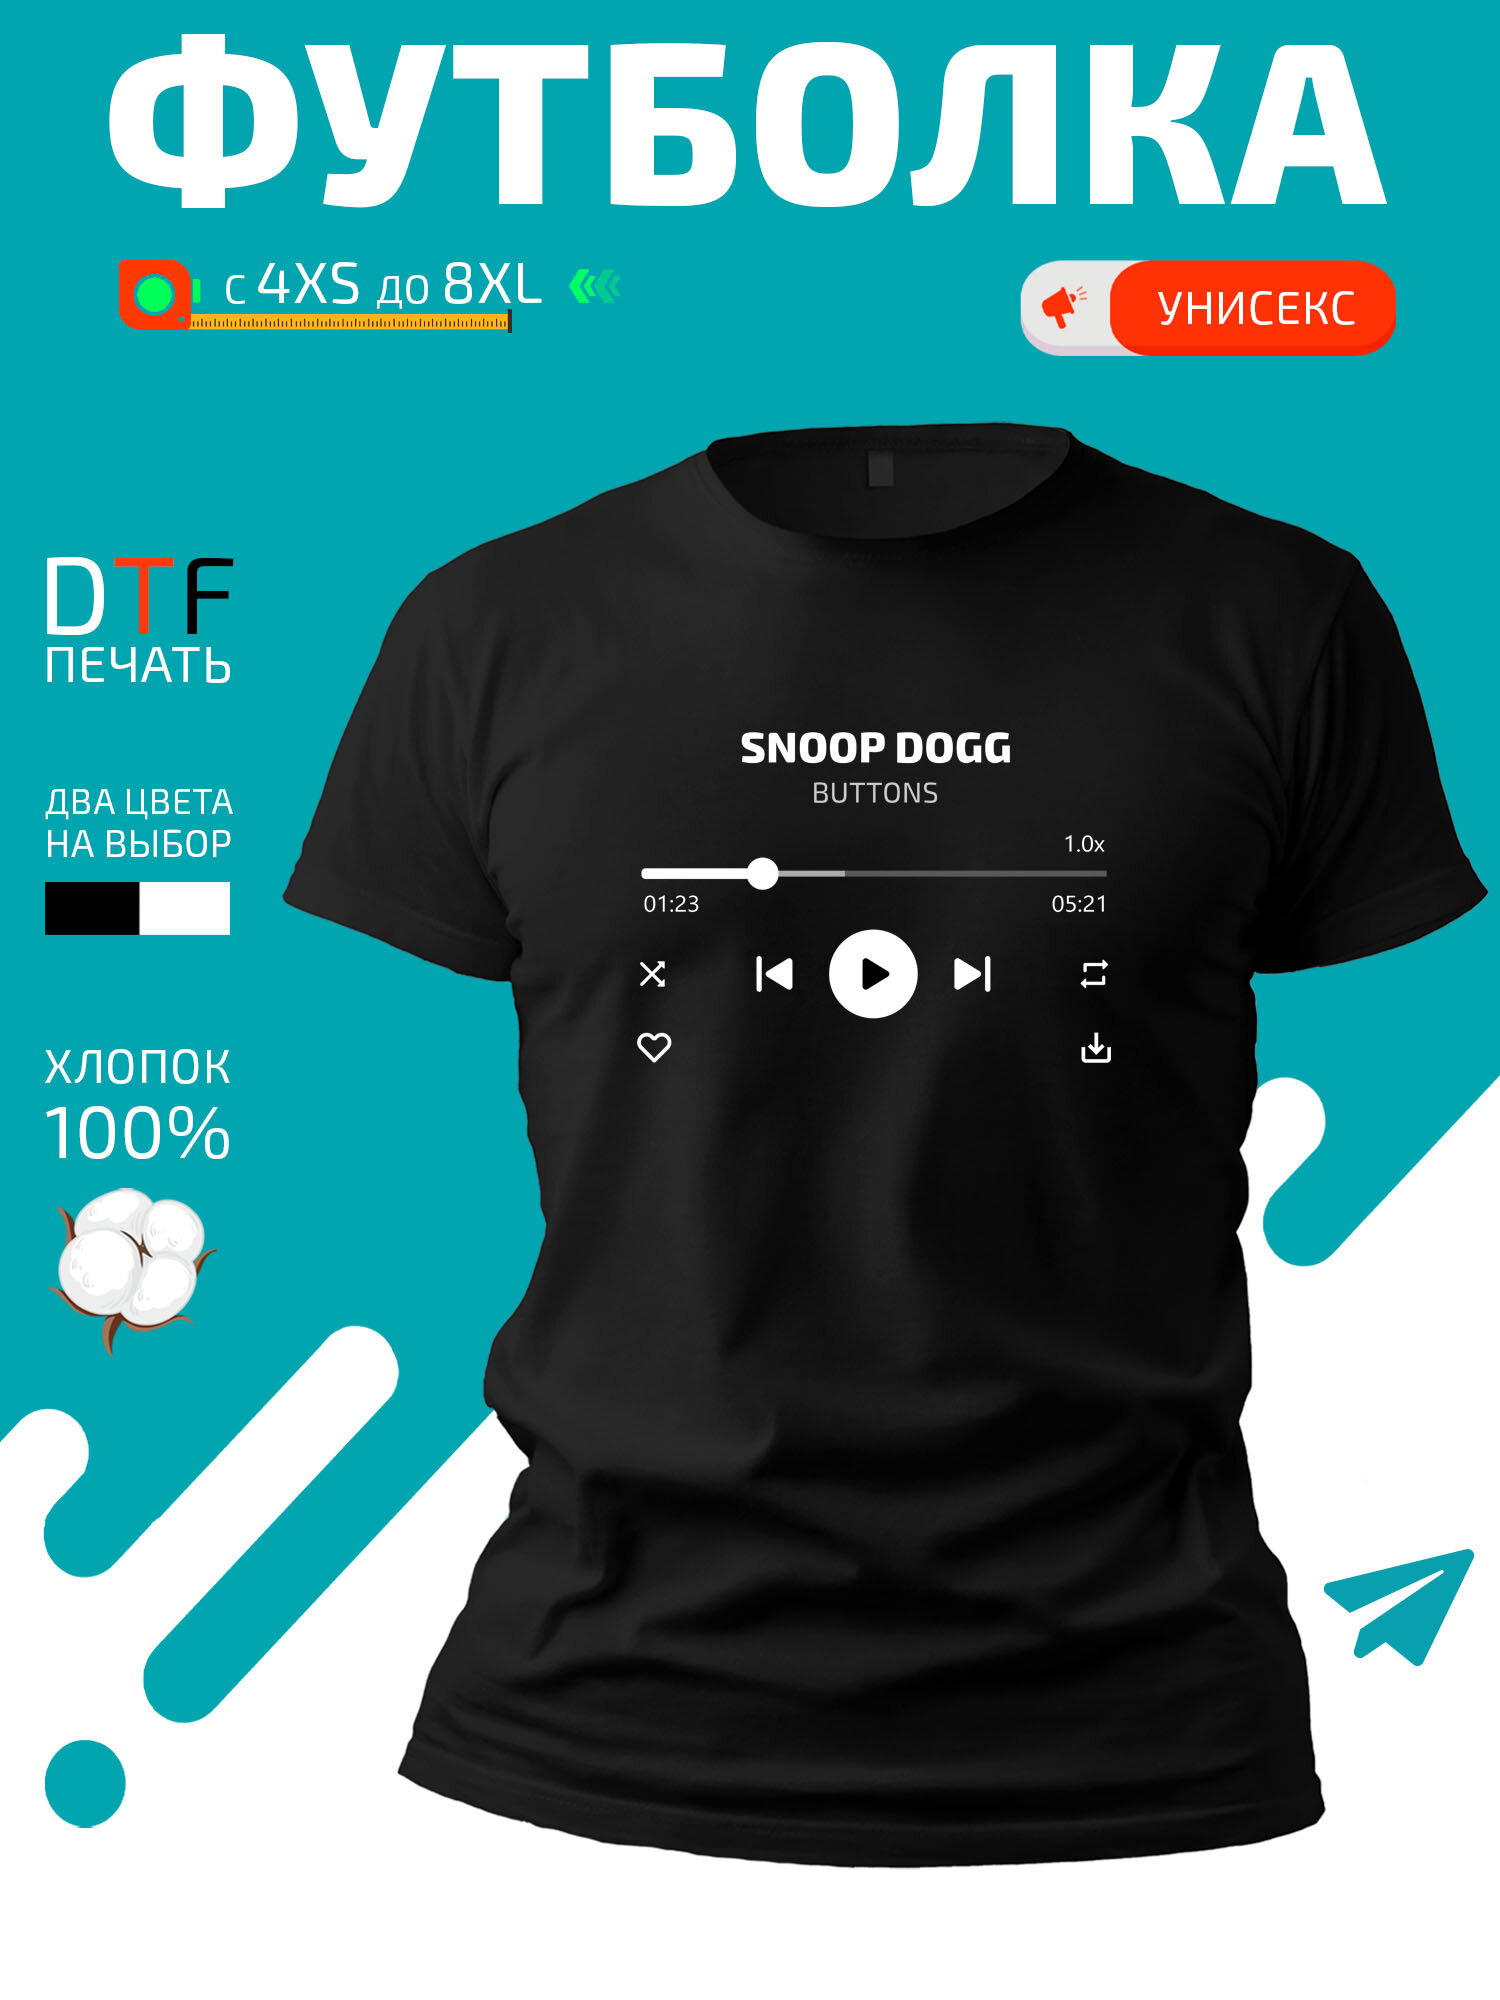 Футболка Snoop Dogg - Buttons